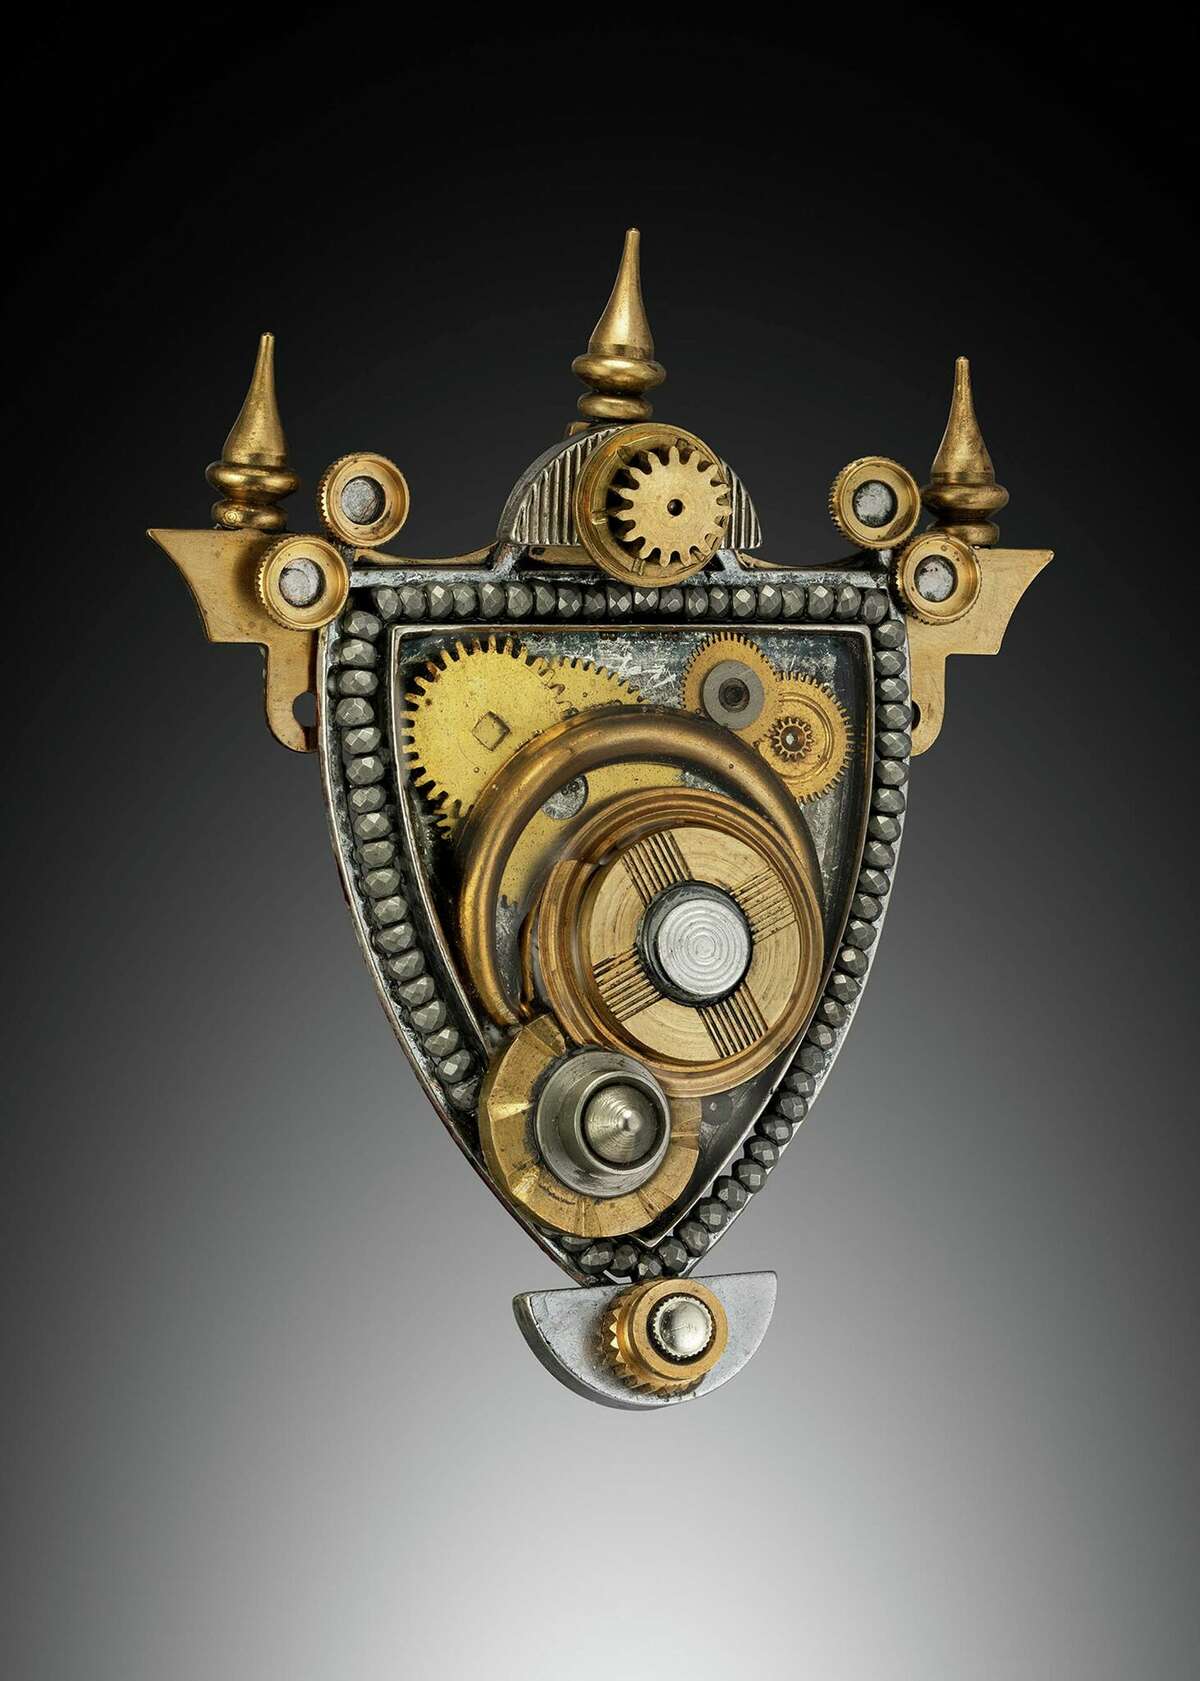 Ann Pedro, "Shield" pendant, vintage brass gears, aluminum, steel, resin, hematite beads, found objects